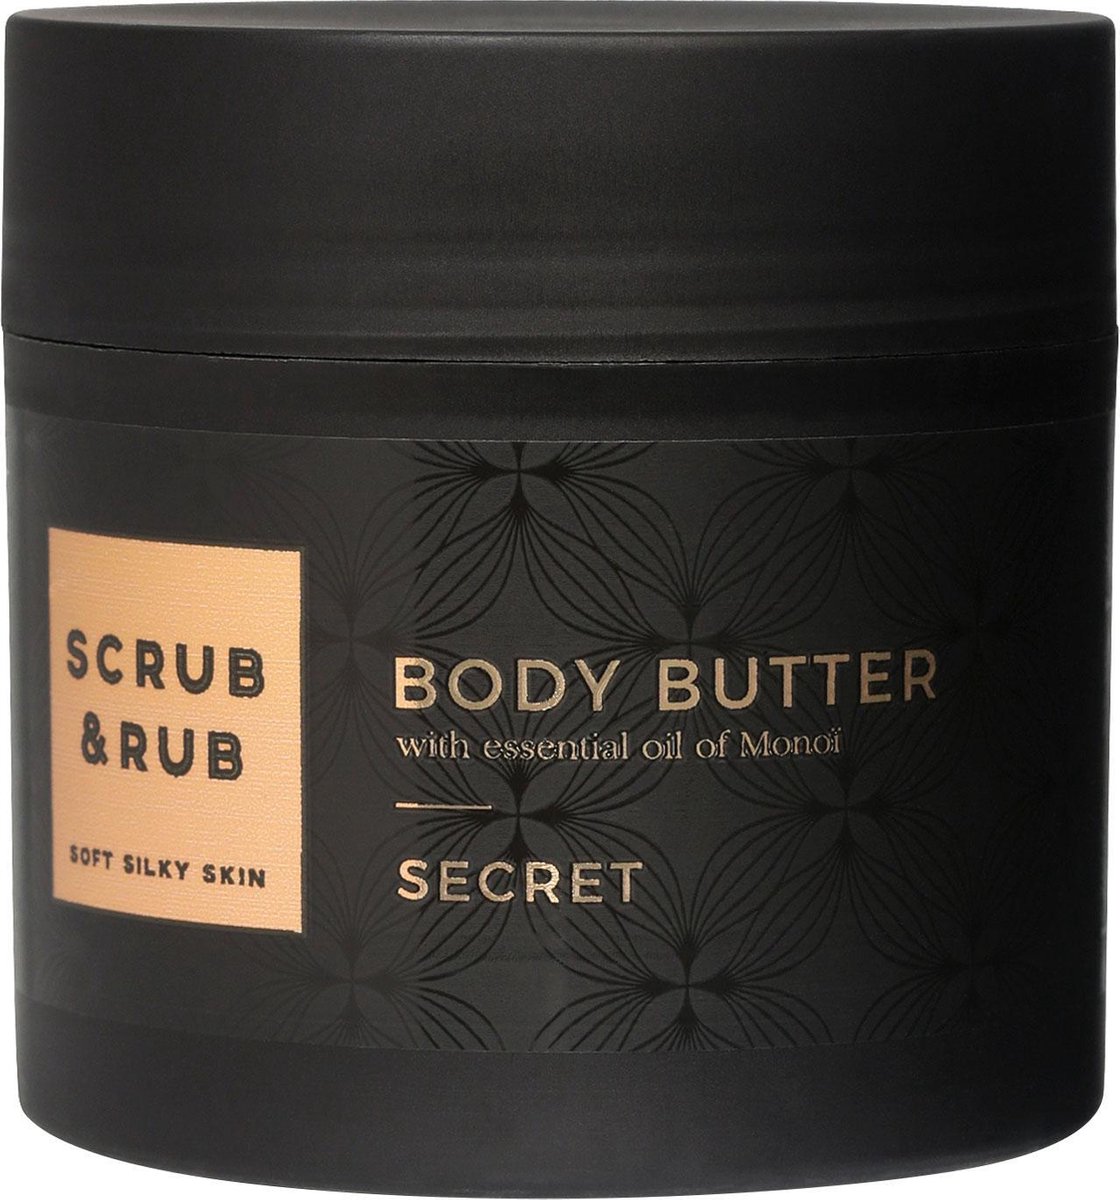 Scrub And Rub Body Butter Secret 200ml